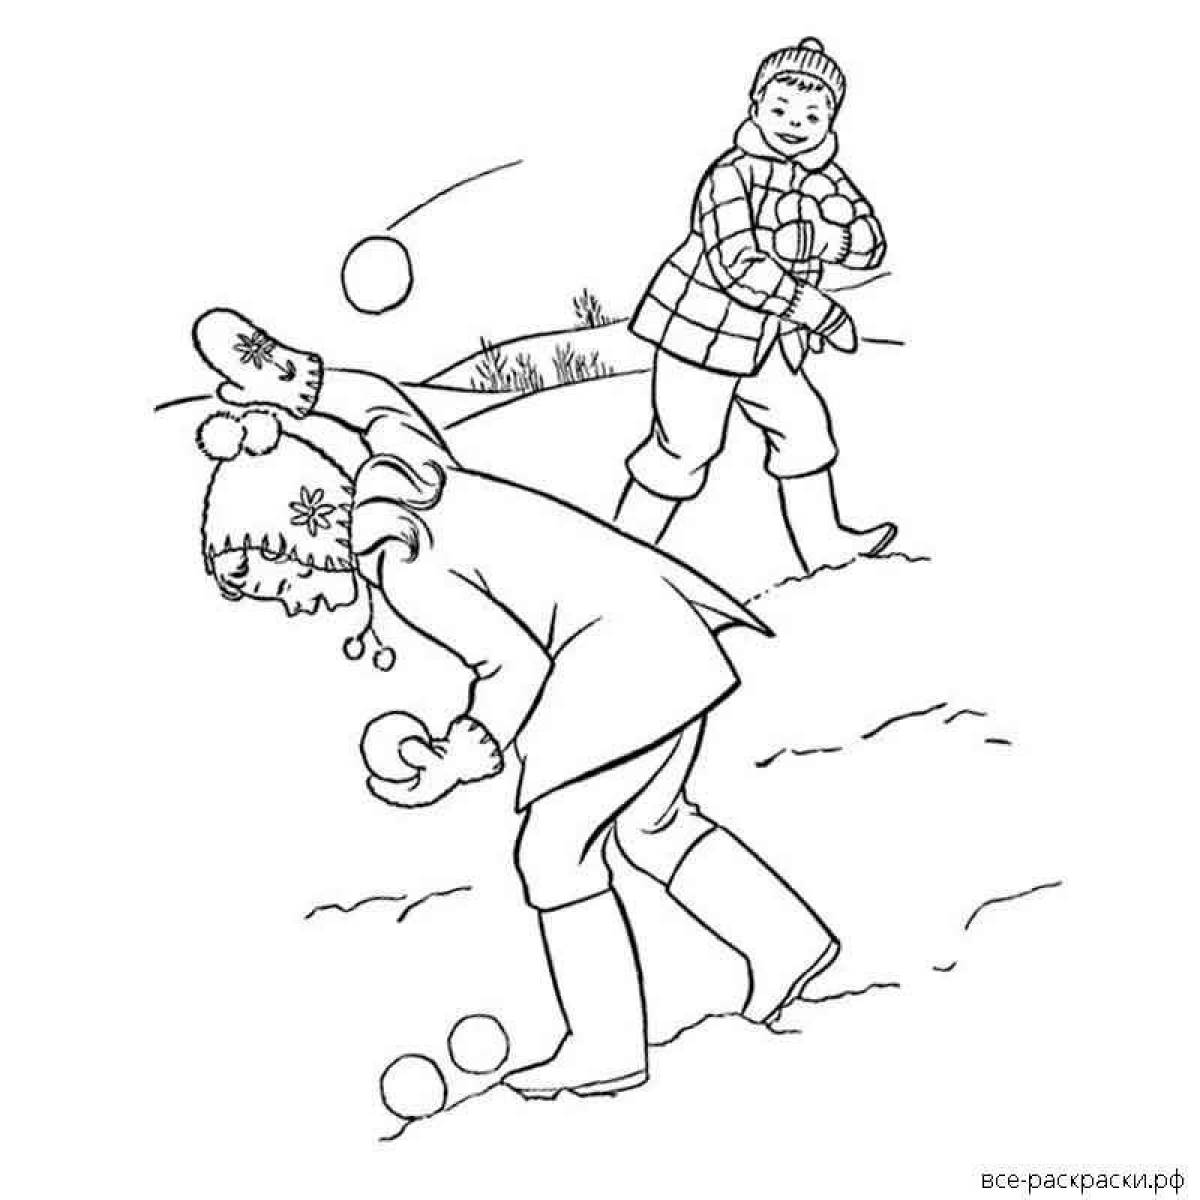 Snowball fight #7